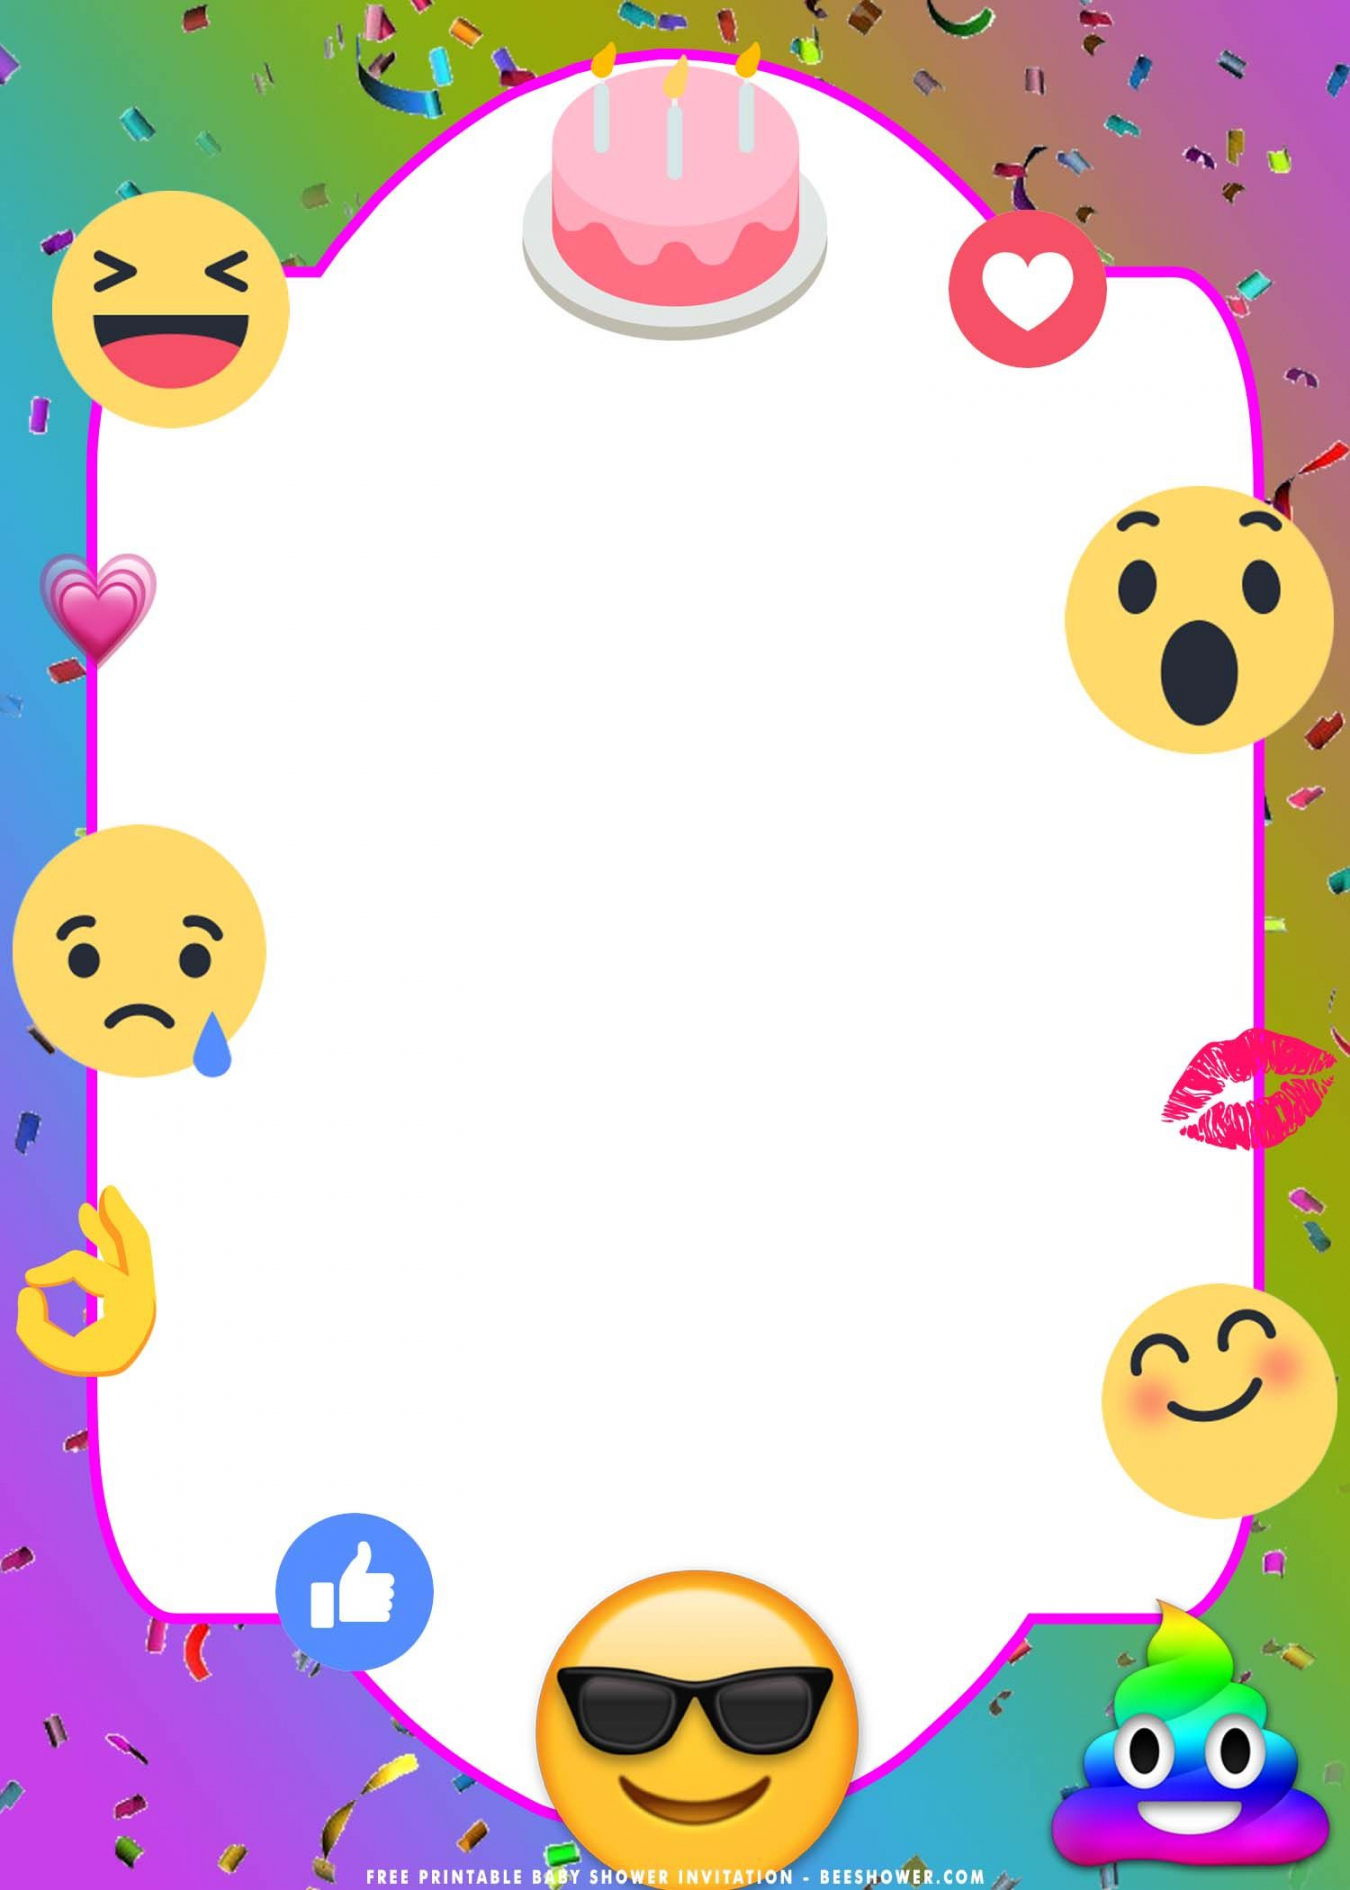 FREE Printable) - Cute Emoji Birthday Party Invitation Templates  - FREE Printables - Emoji Invitations Printable Free